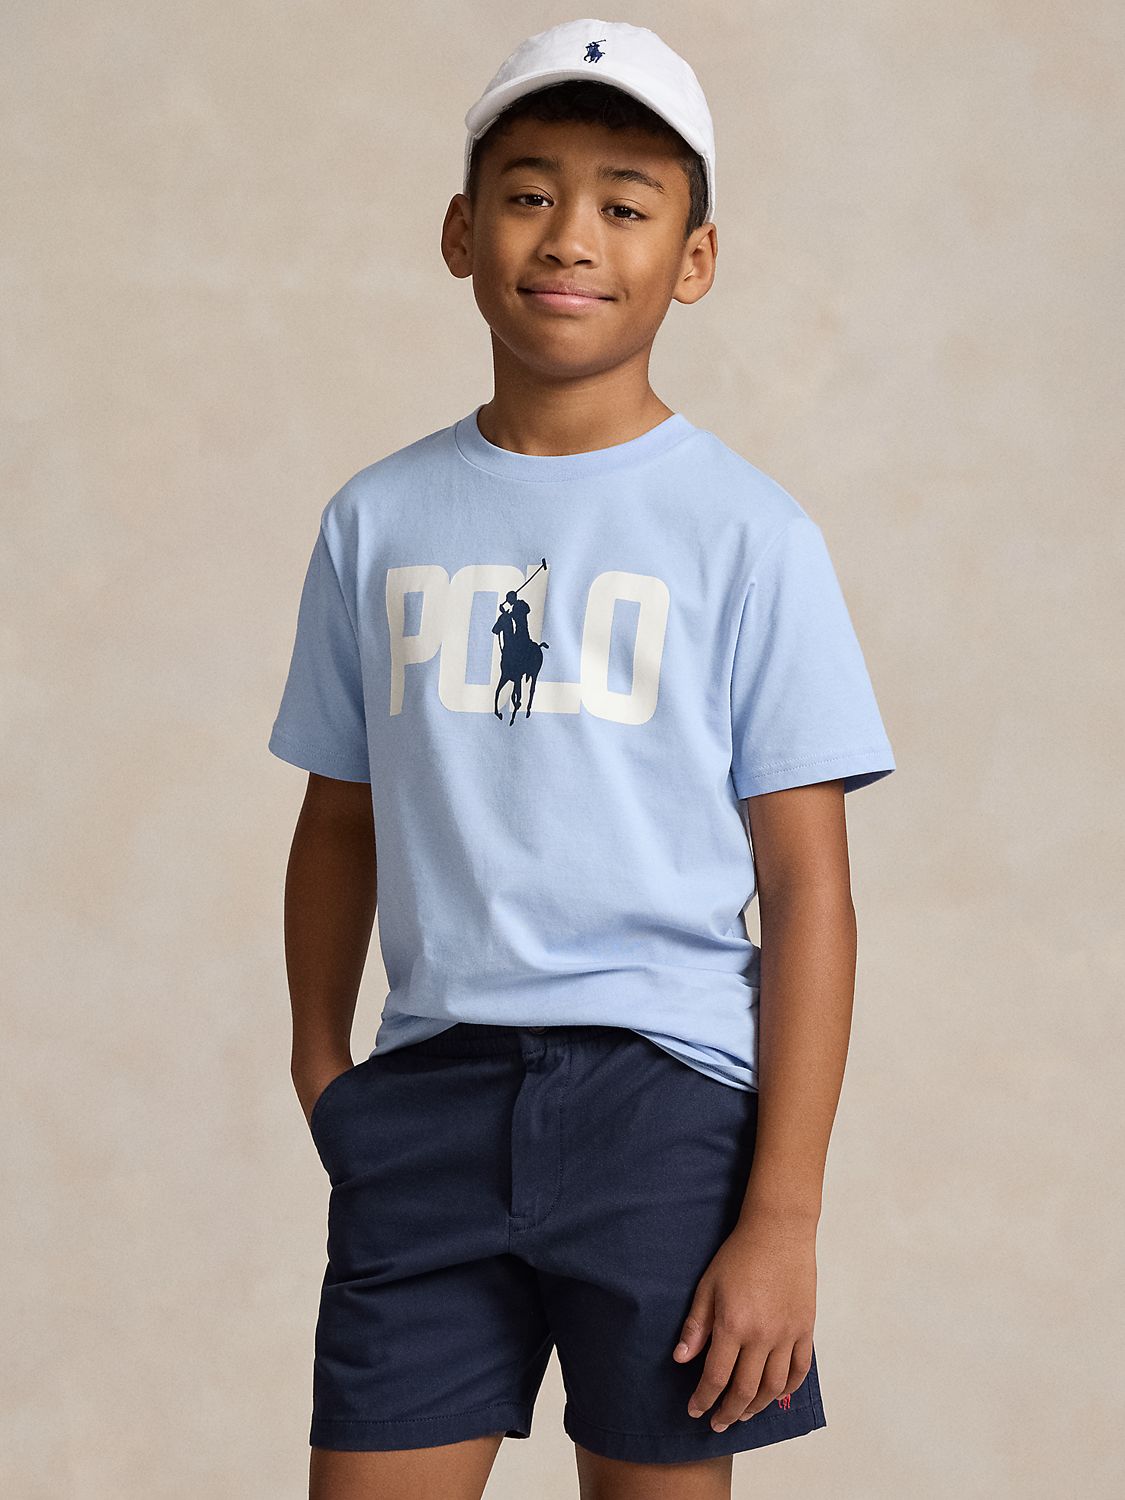 Ralph Lauren Kids' Polo Iconic Logo Colour Changing T-Shirt, Blue Hyacinth, 4 years